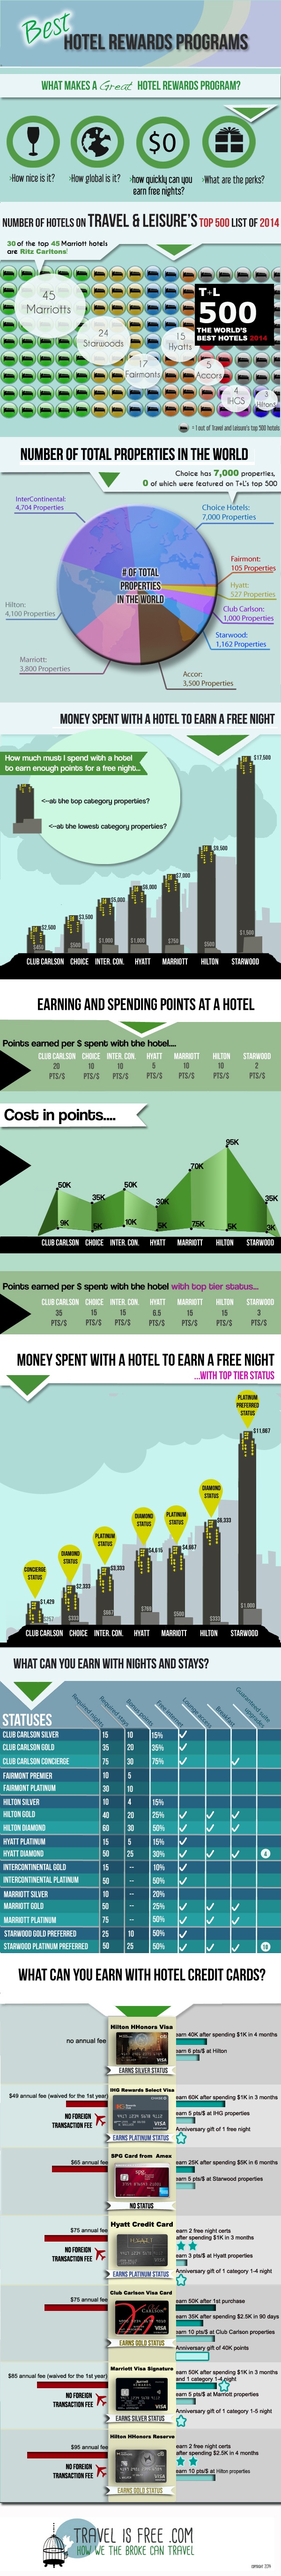 best-hotel-rewards-program3_2.jpg